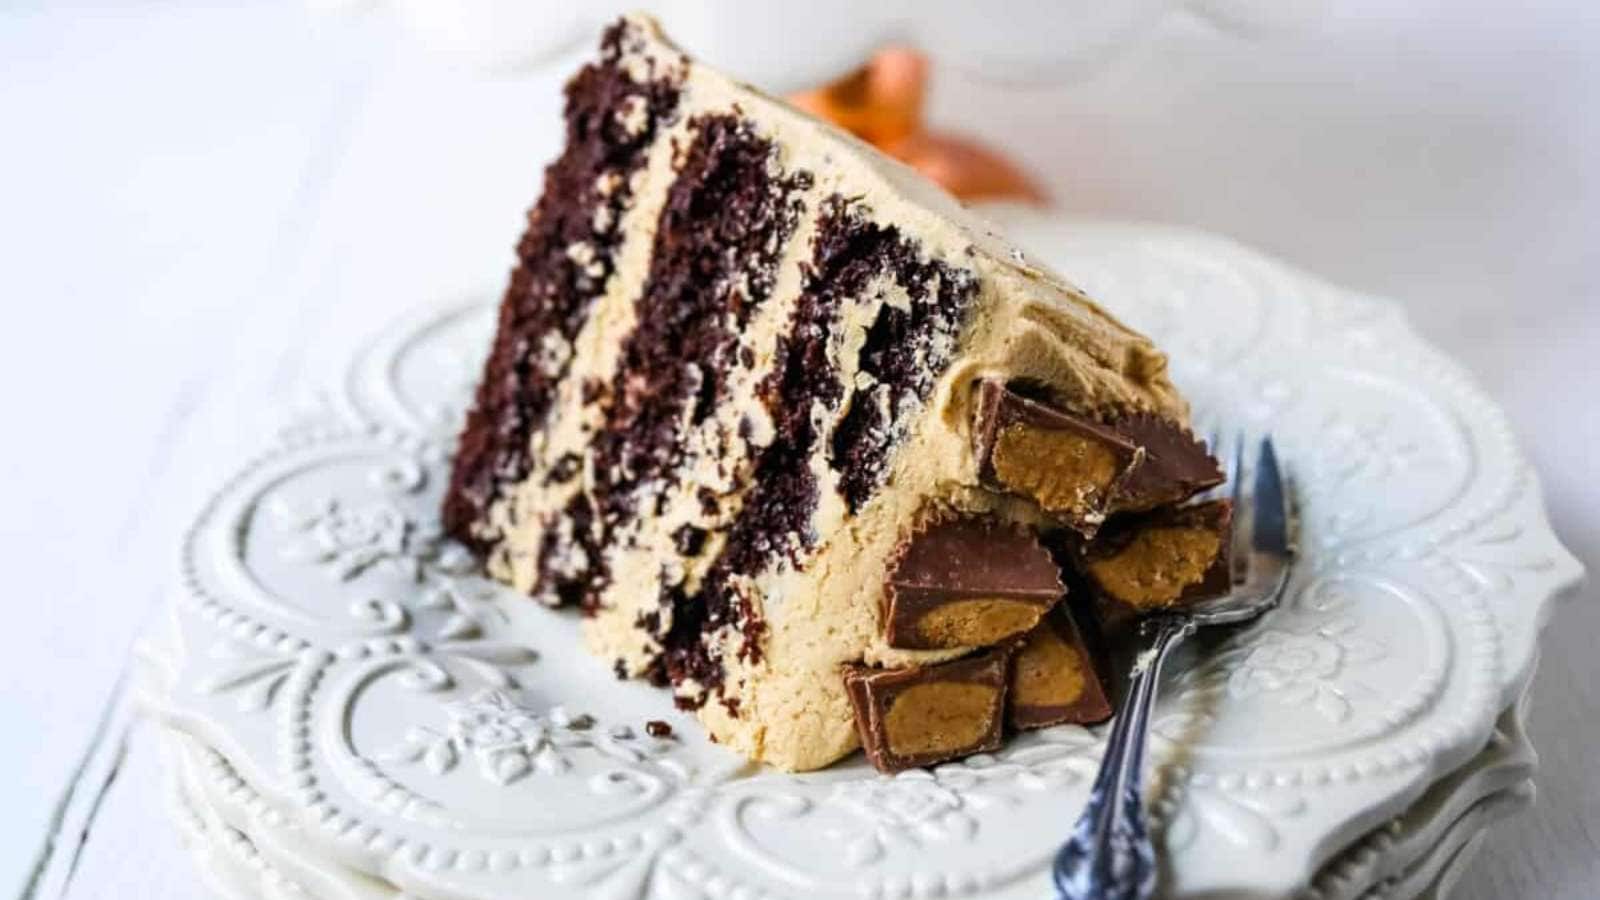 Peanut Butter Chocolate Layer Cake recipe by Modern Honey.